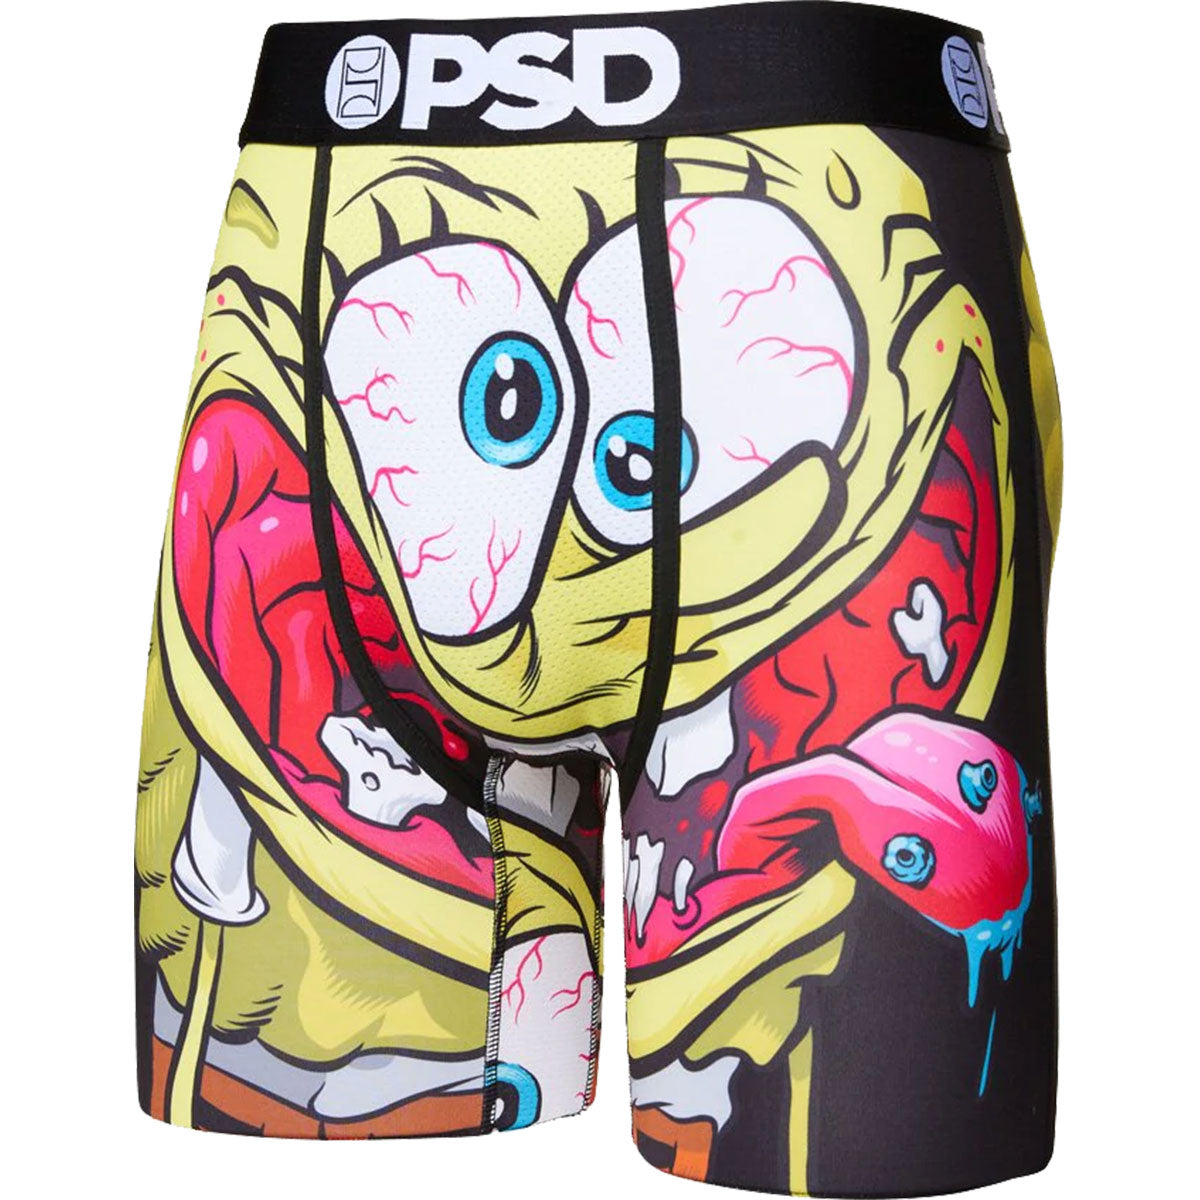 PSD Spongebob Krusty Pants Boxer Men's Bottom Underwear-321180023